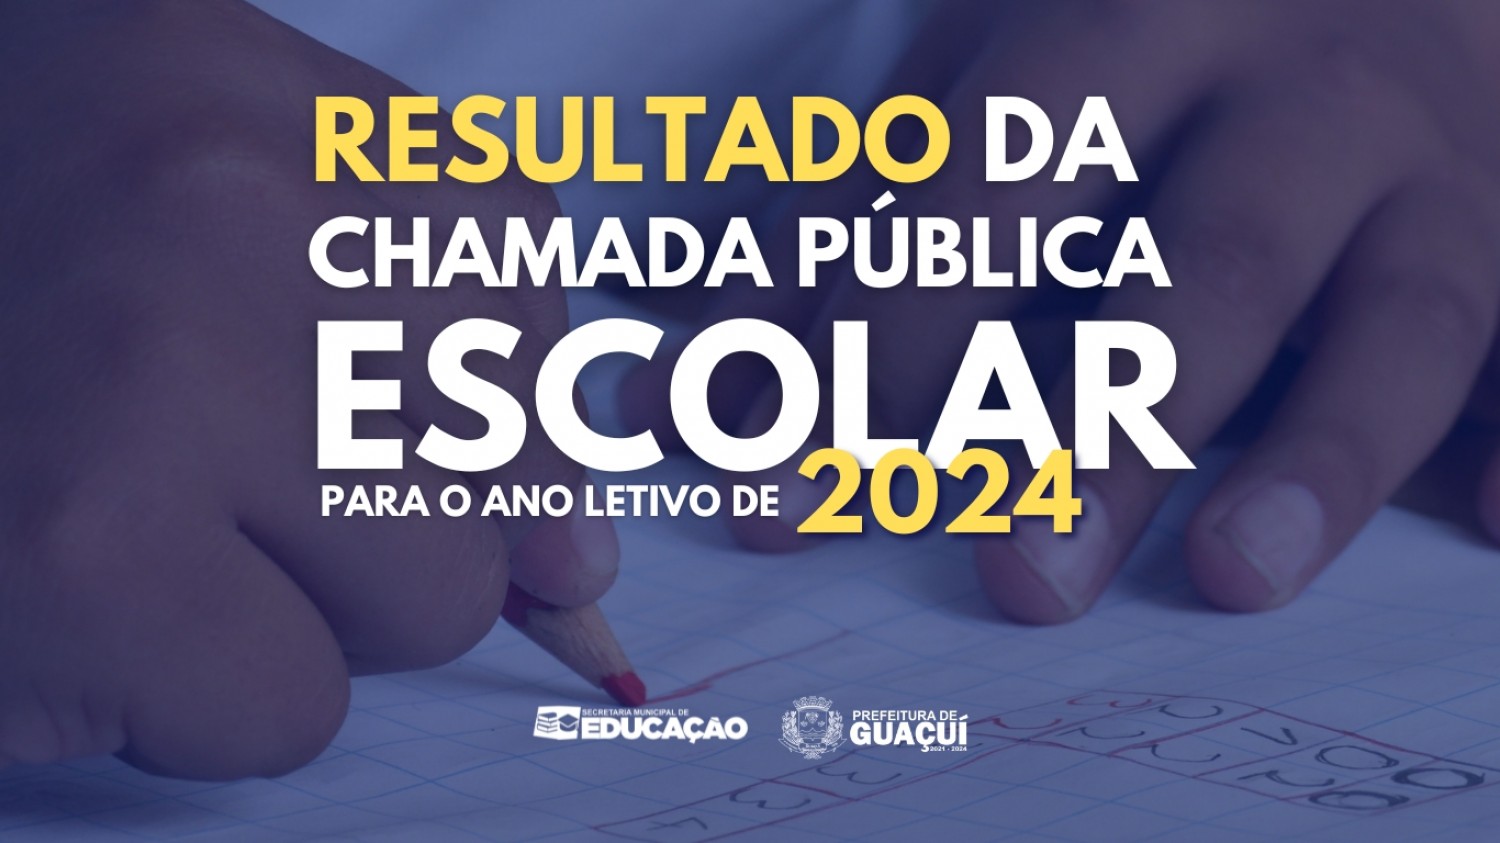 PREFEITURA DE GUAÇUÍ ANUNCIA RESULTADOS DA CHAMADA PÚBLICA ESCOLAR PARA 2024